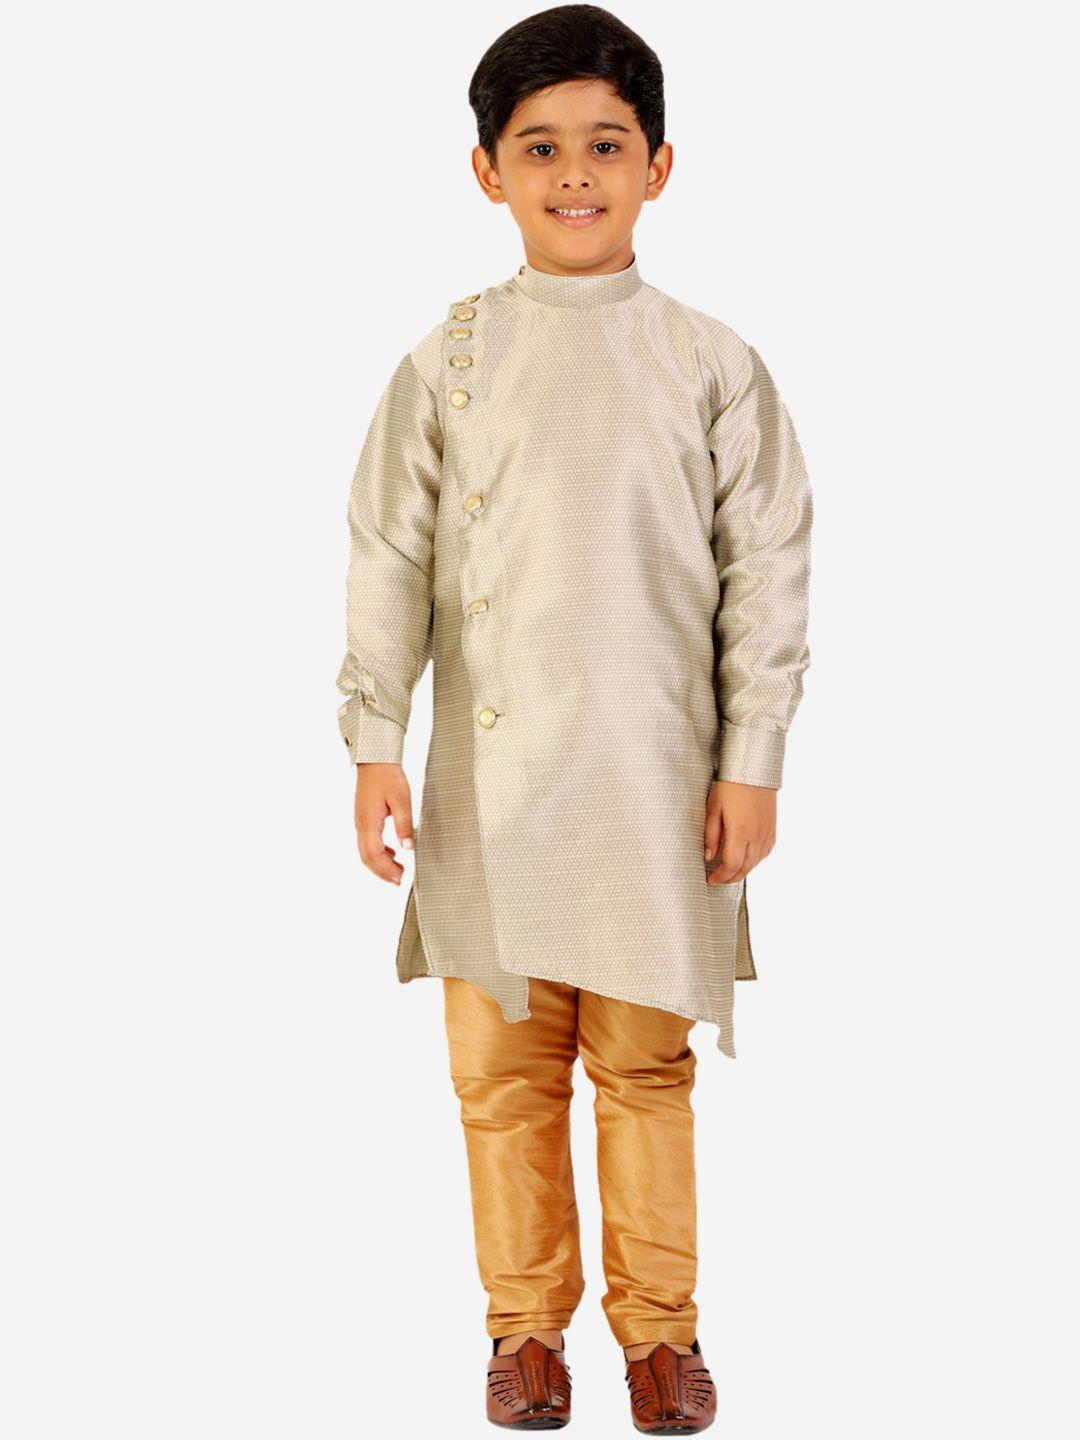 pro-ethic-style-developer-boys-cream-coloured-&-brown-printed-pyjama